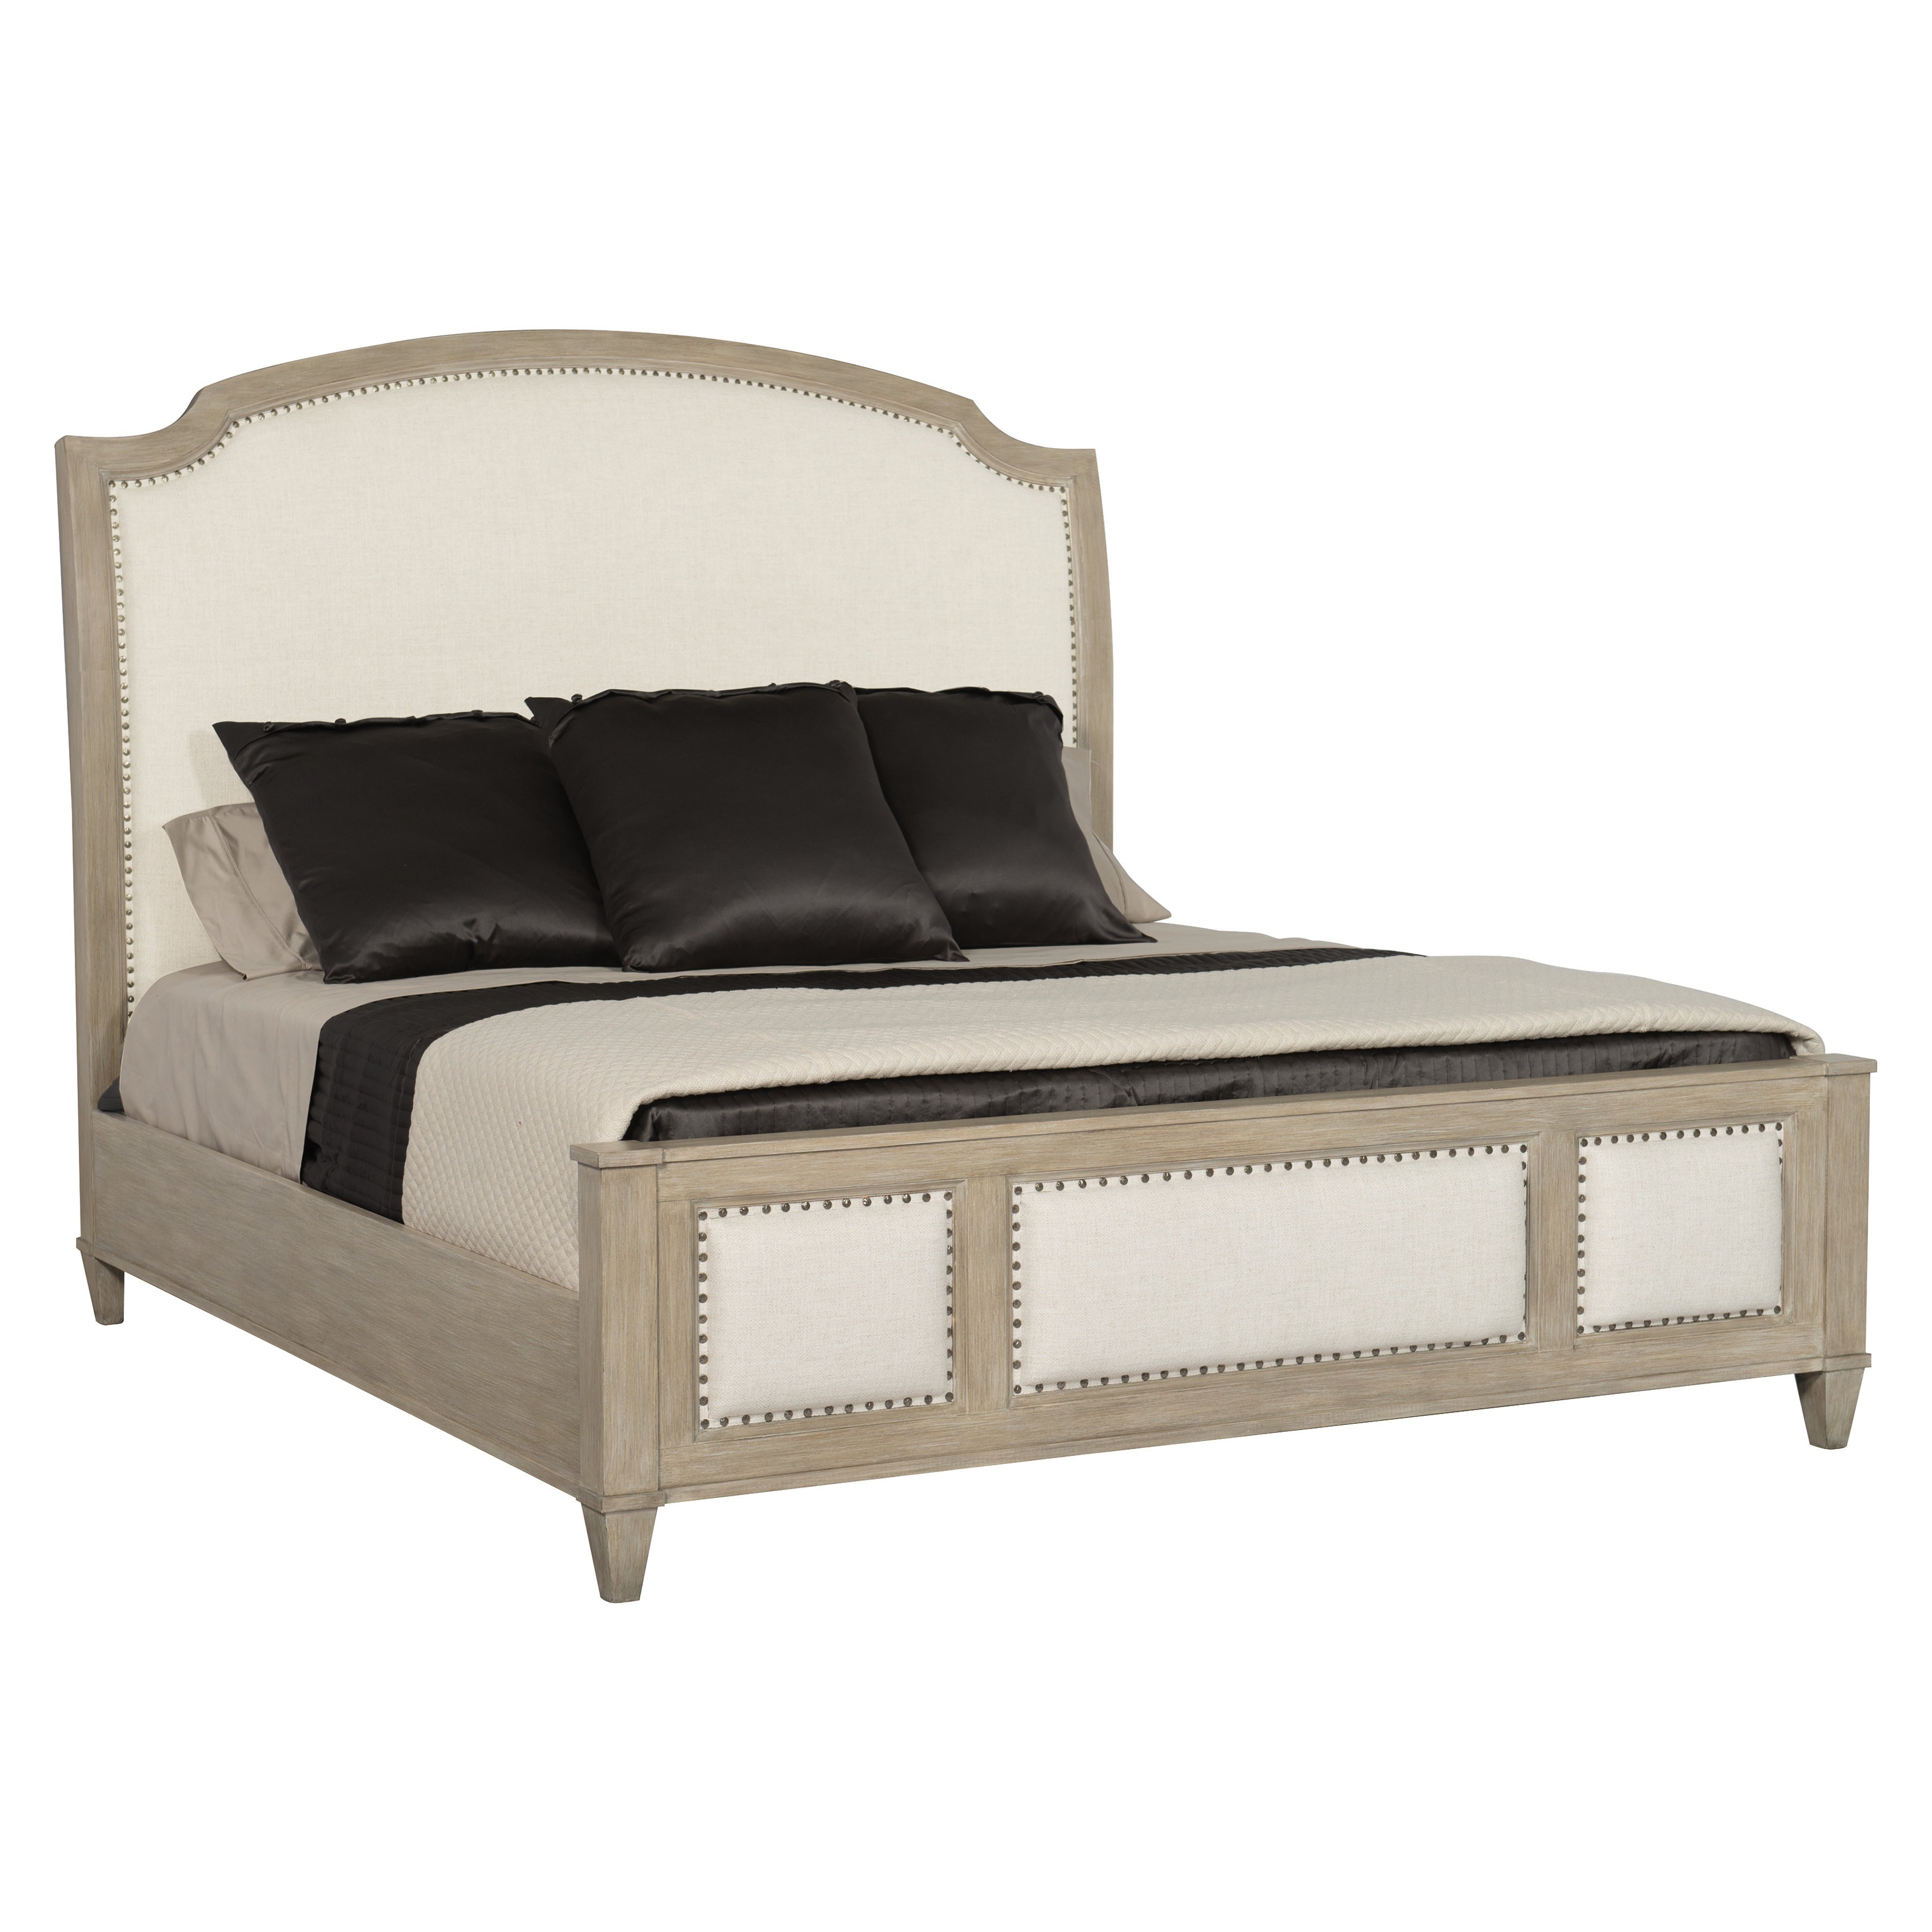 Santa Barbara Upholstered Queen Panel Bed